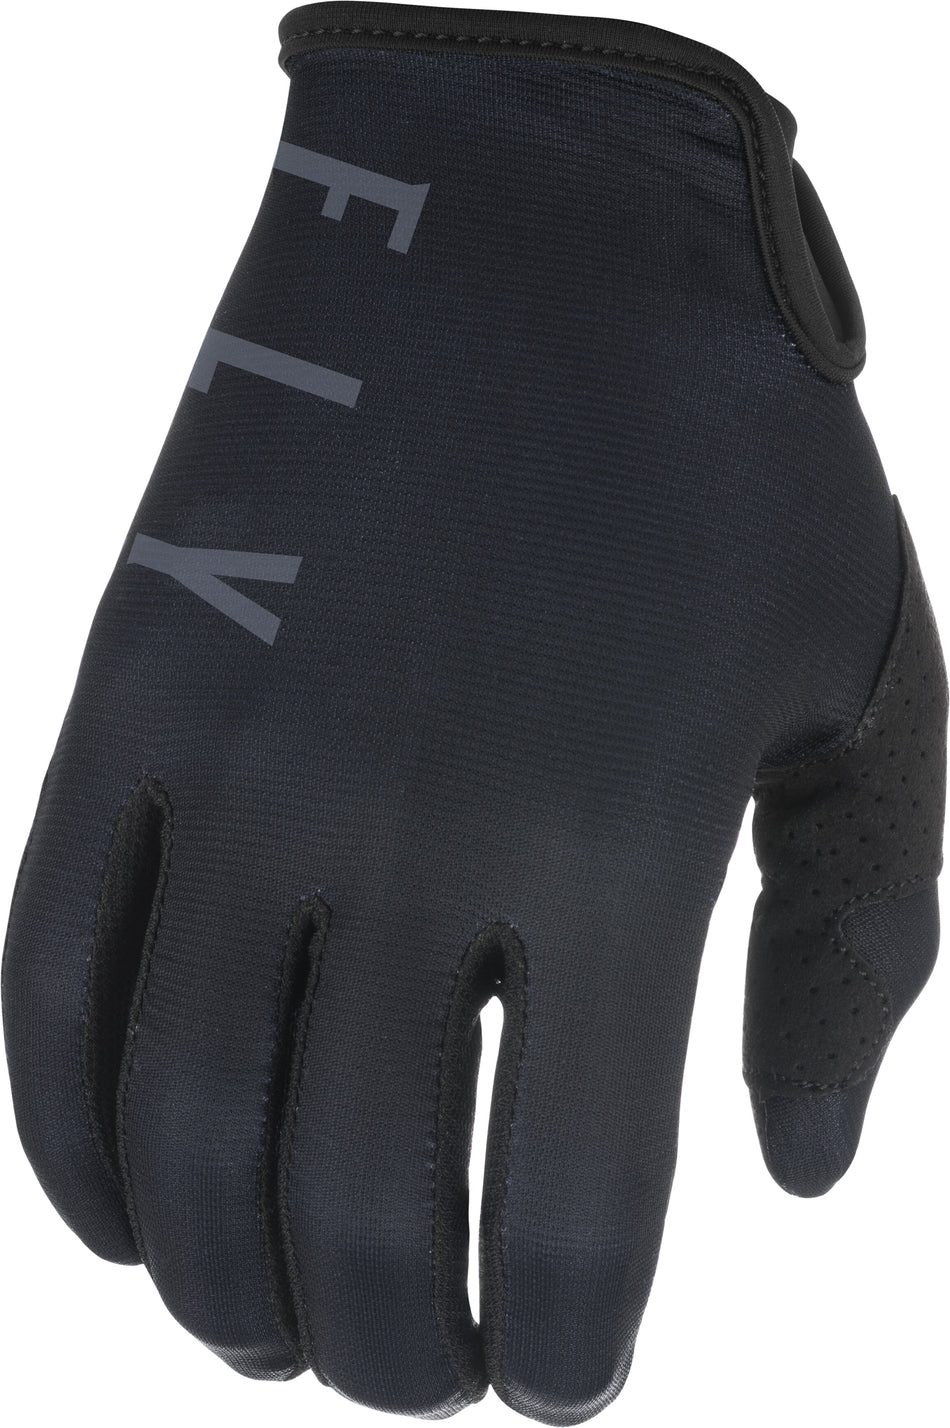 FLY RACING Lite Gloves Black/Grey Sz 12 374-71012